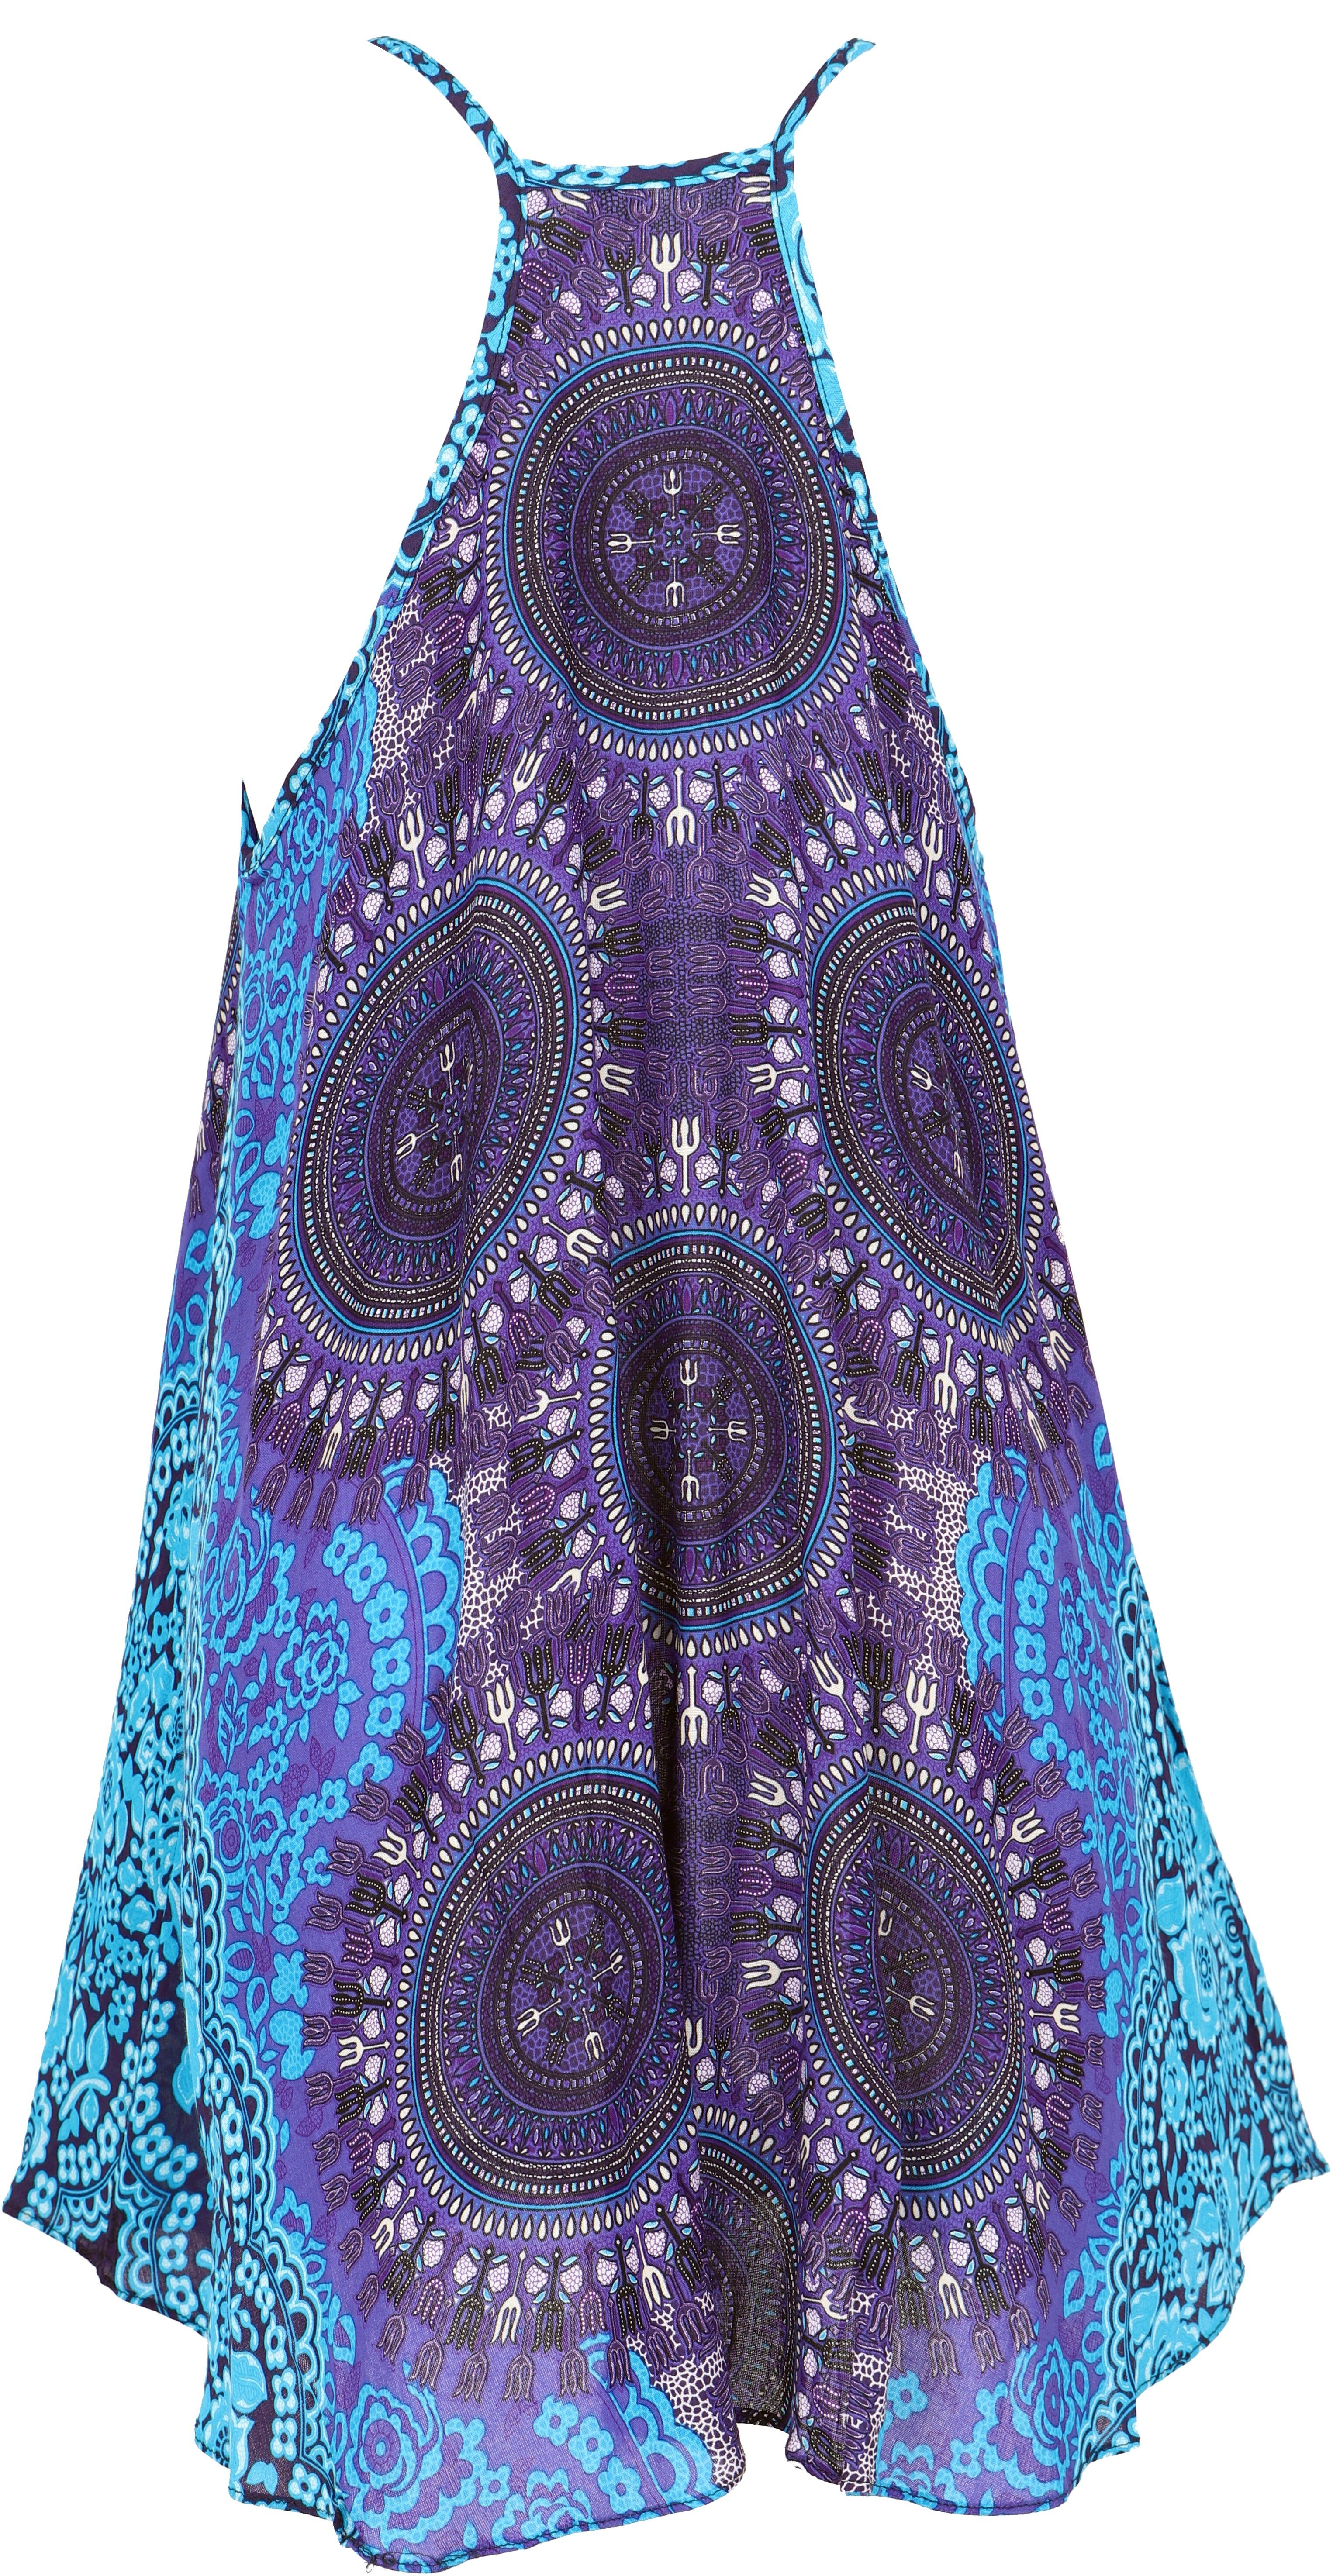 Minikleid, Boho flieder/blau Bekleidung Trägerkleid,.. Midikleid alternative Guru-Shop Mandala